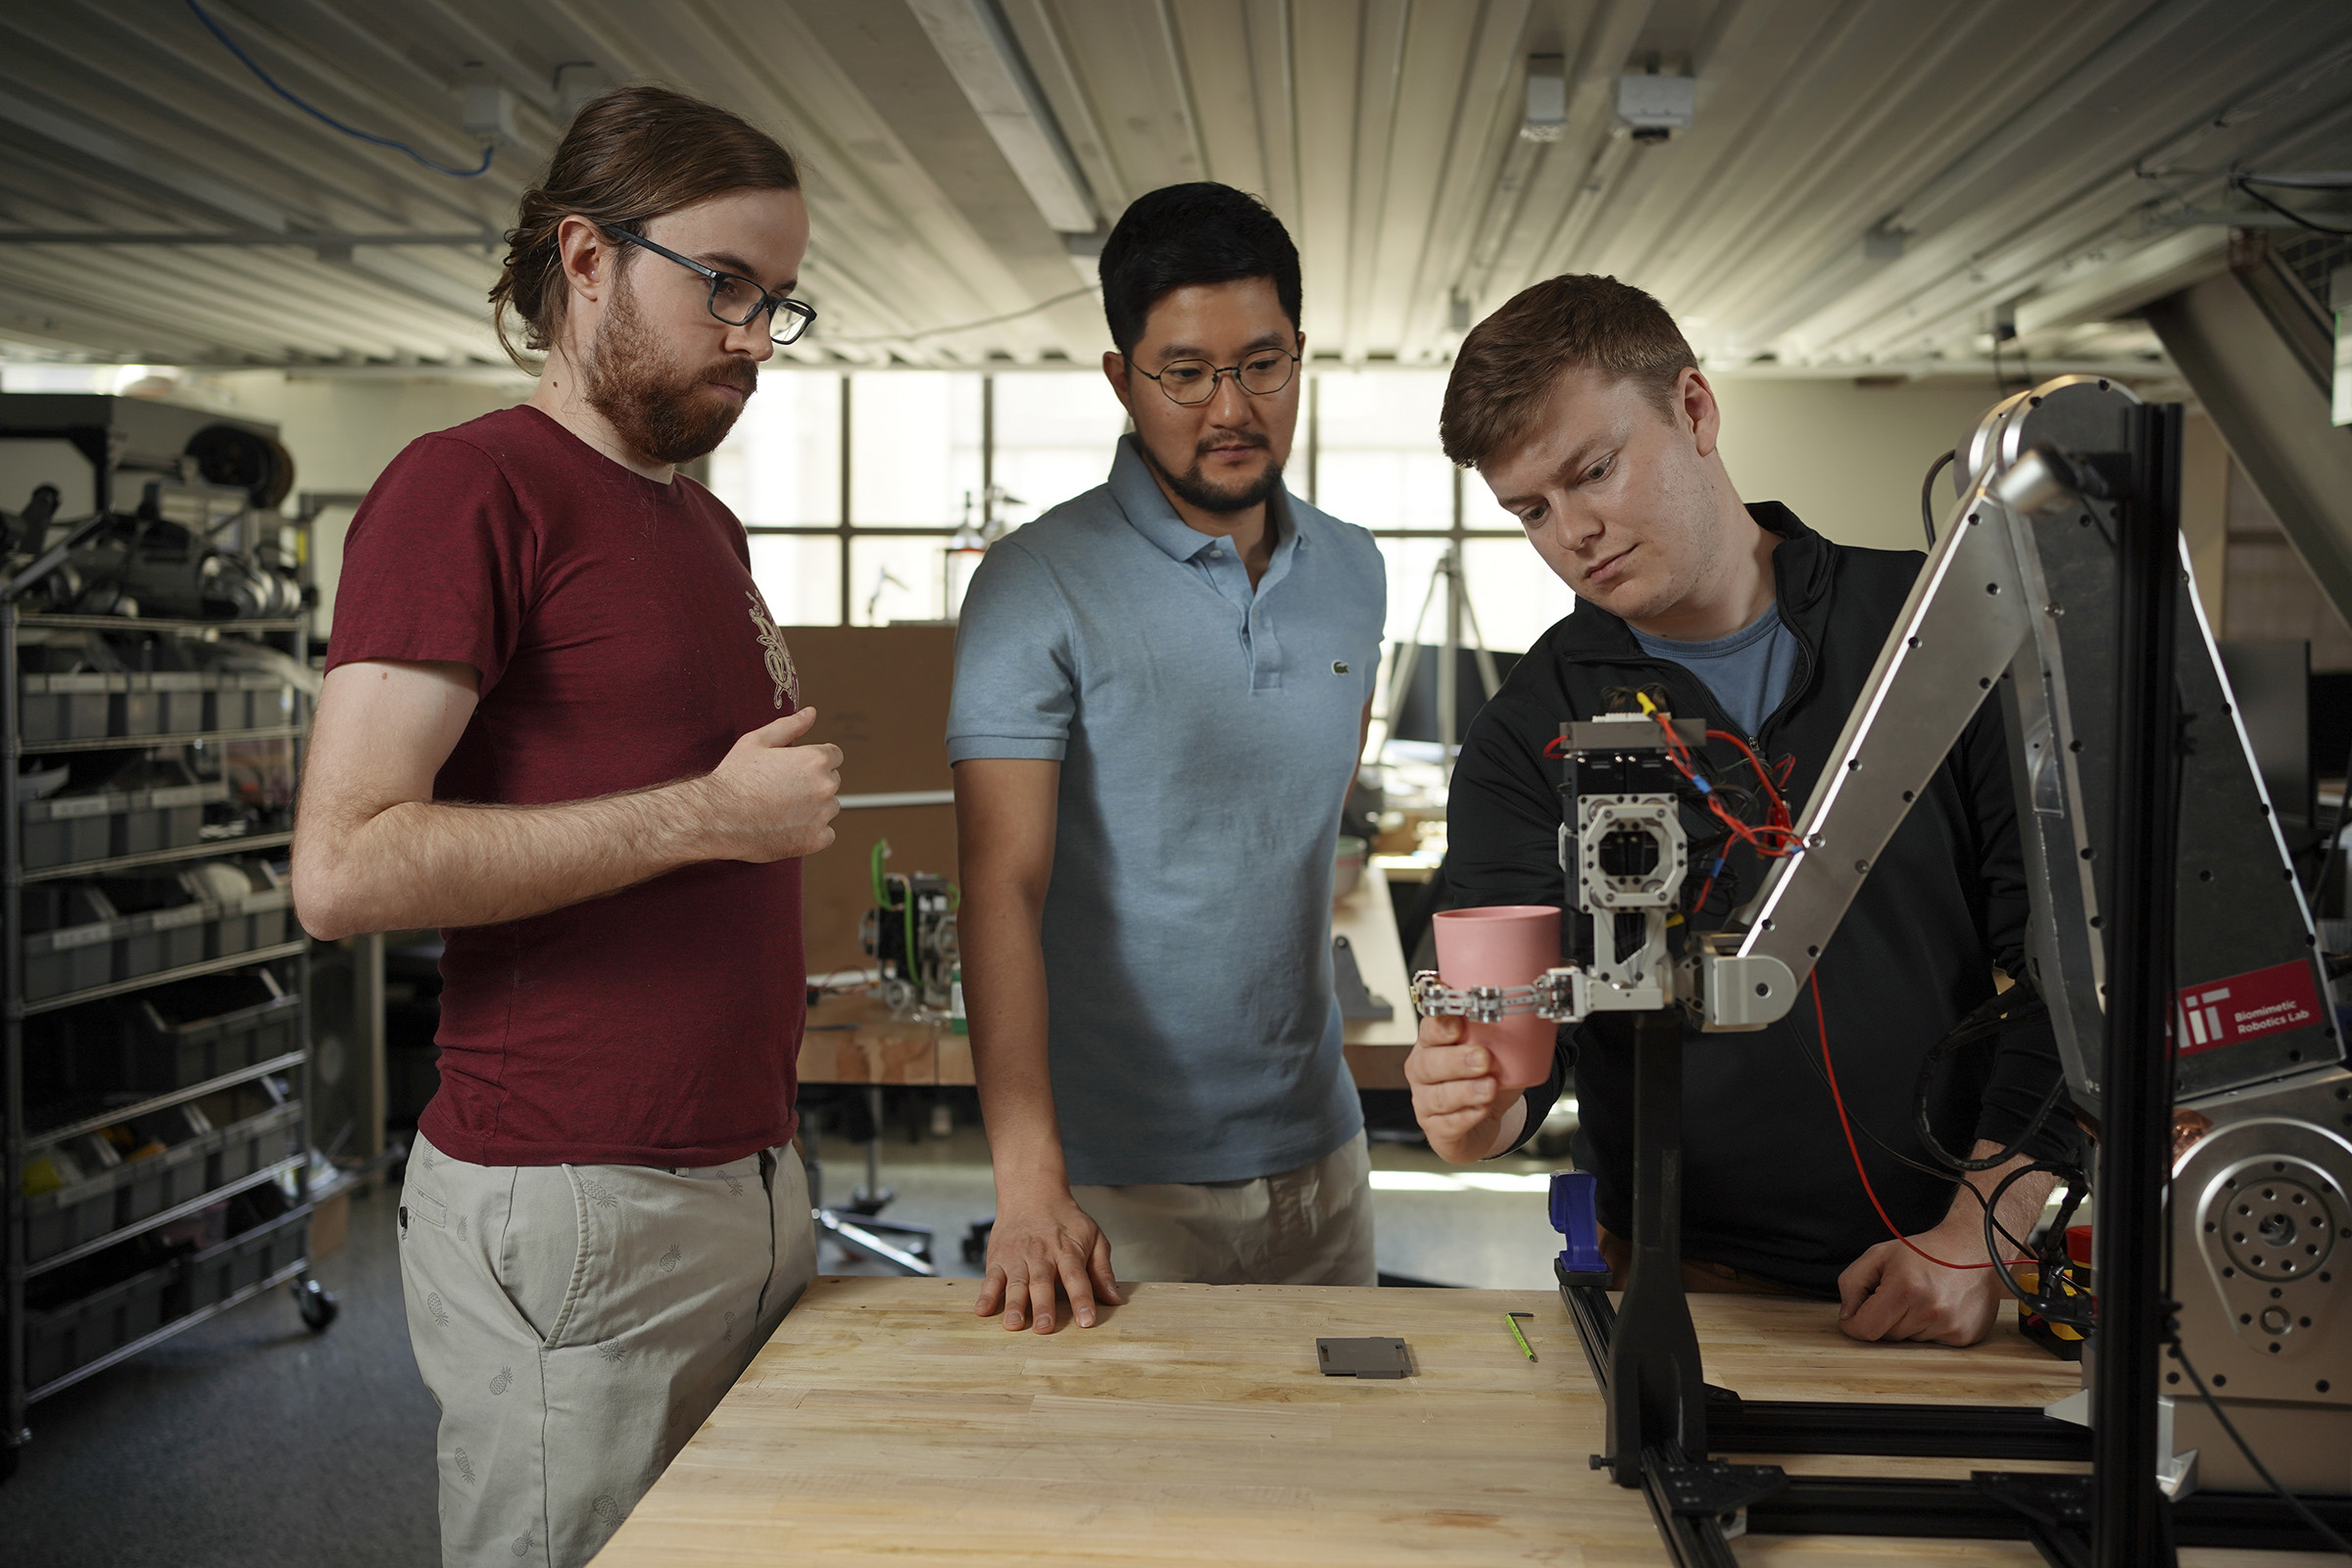 Speedy robo-gripper reflexively organizes cluttered spaces, MIT News